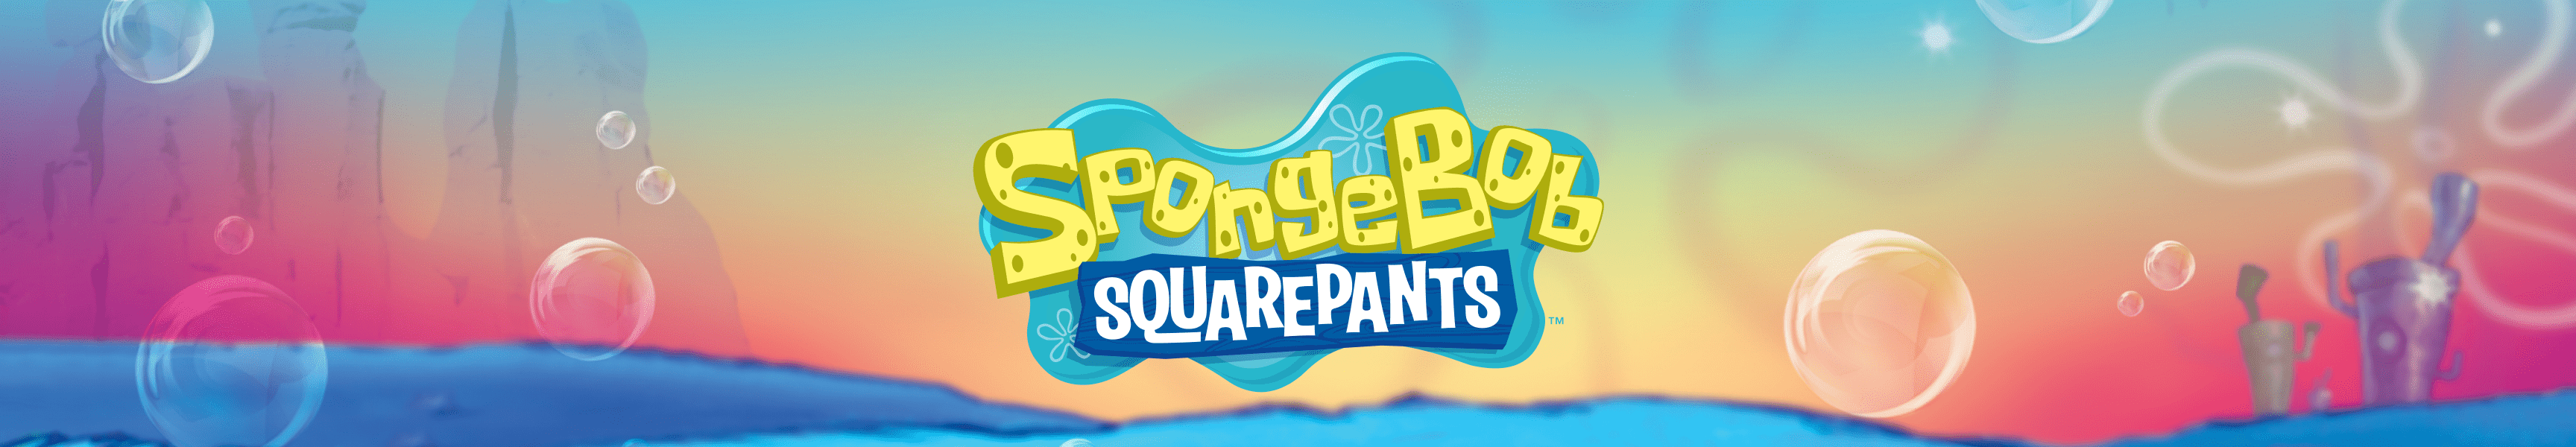 SpongeBob SquarePants Glassware